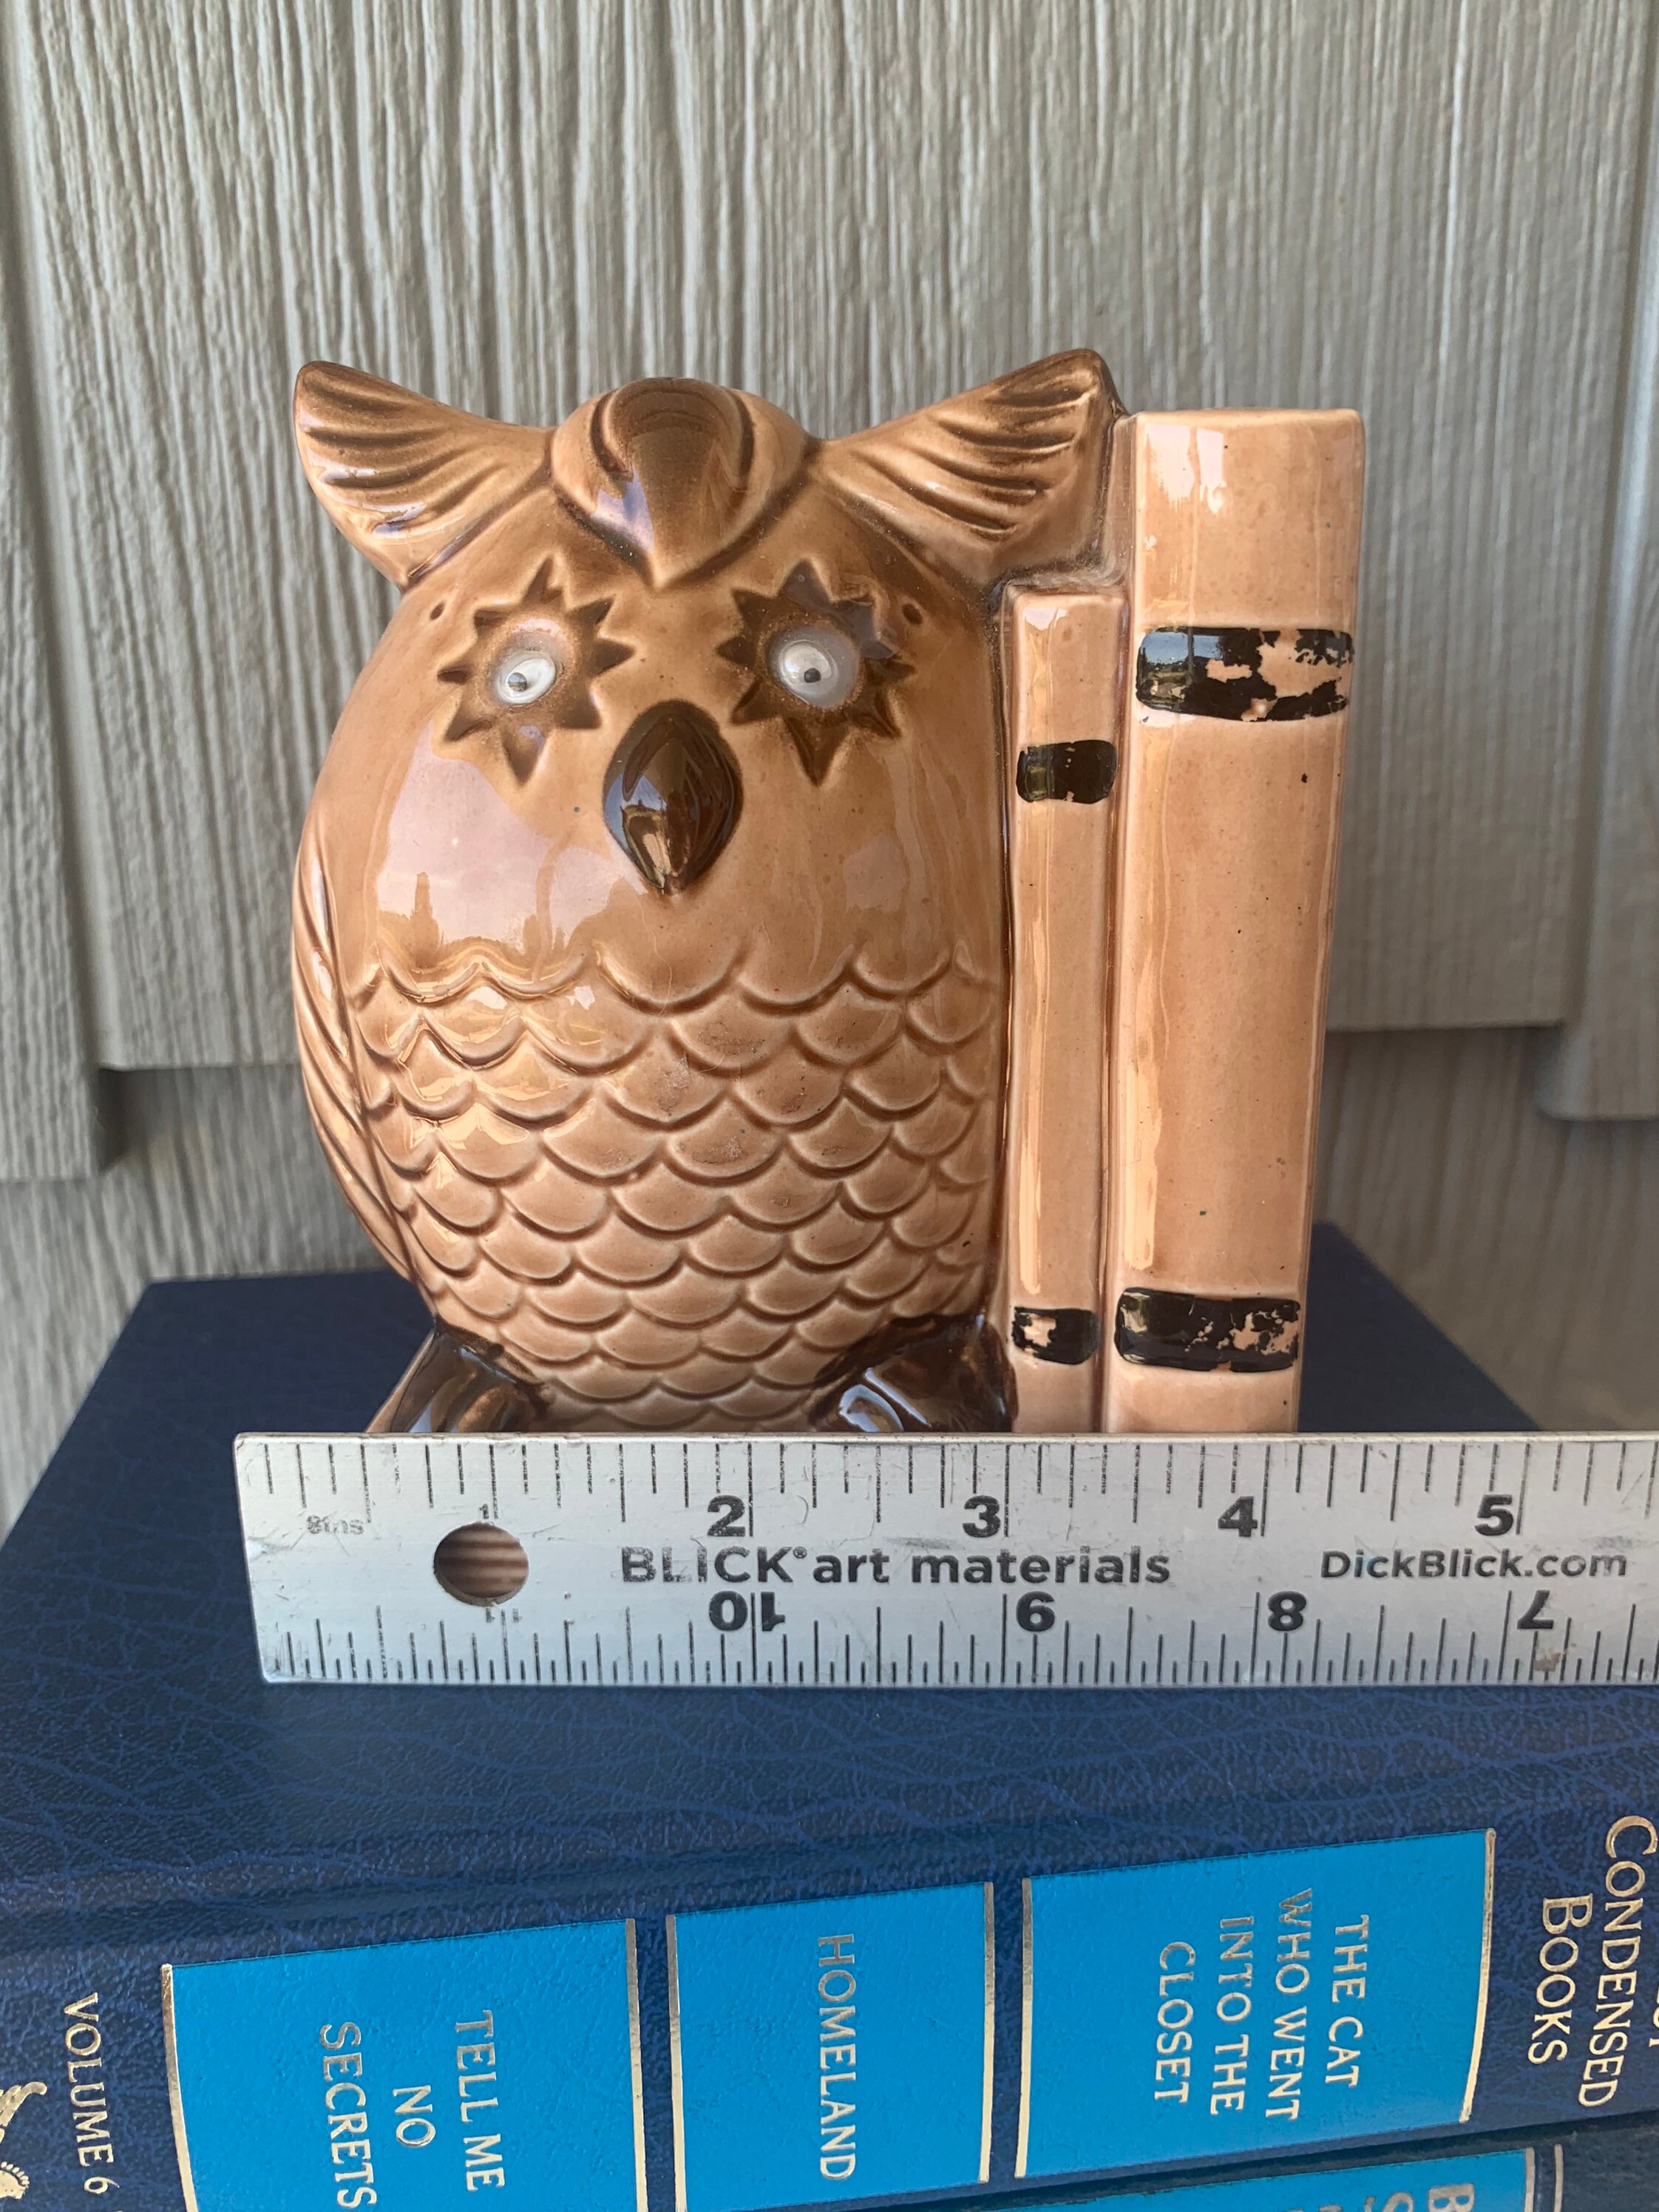 Vintage Googly Eye Wise Owl Book End Statue Figurine